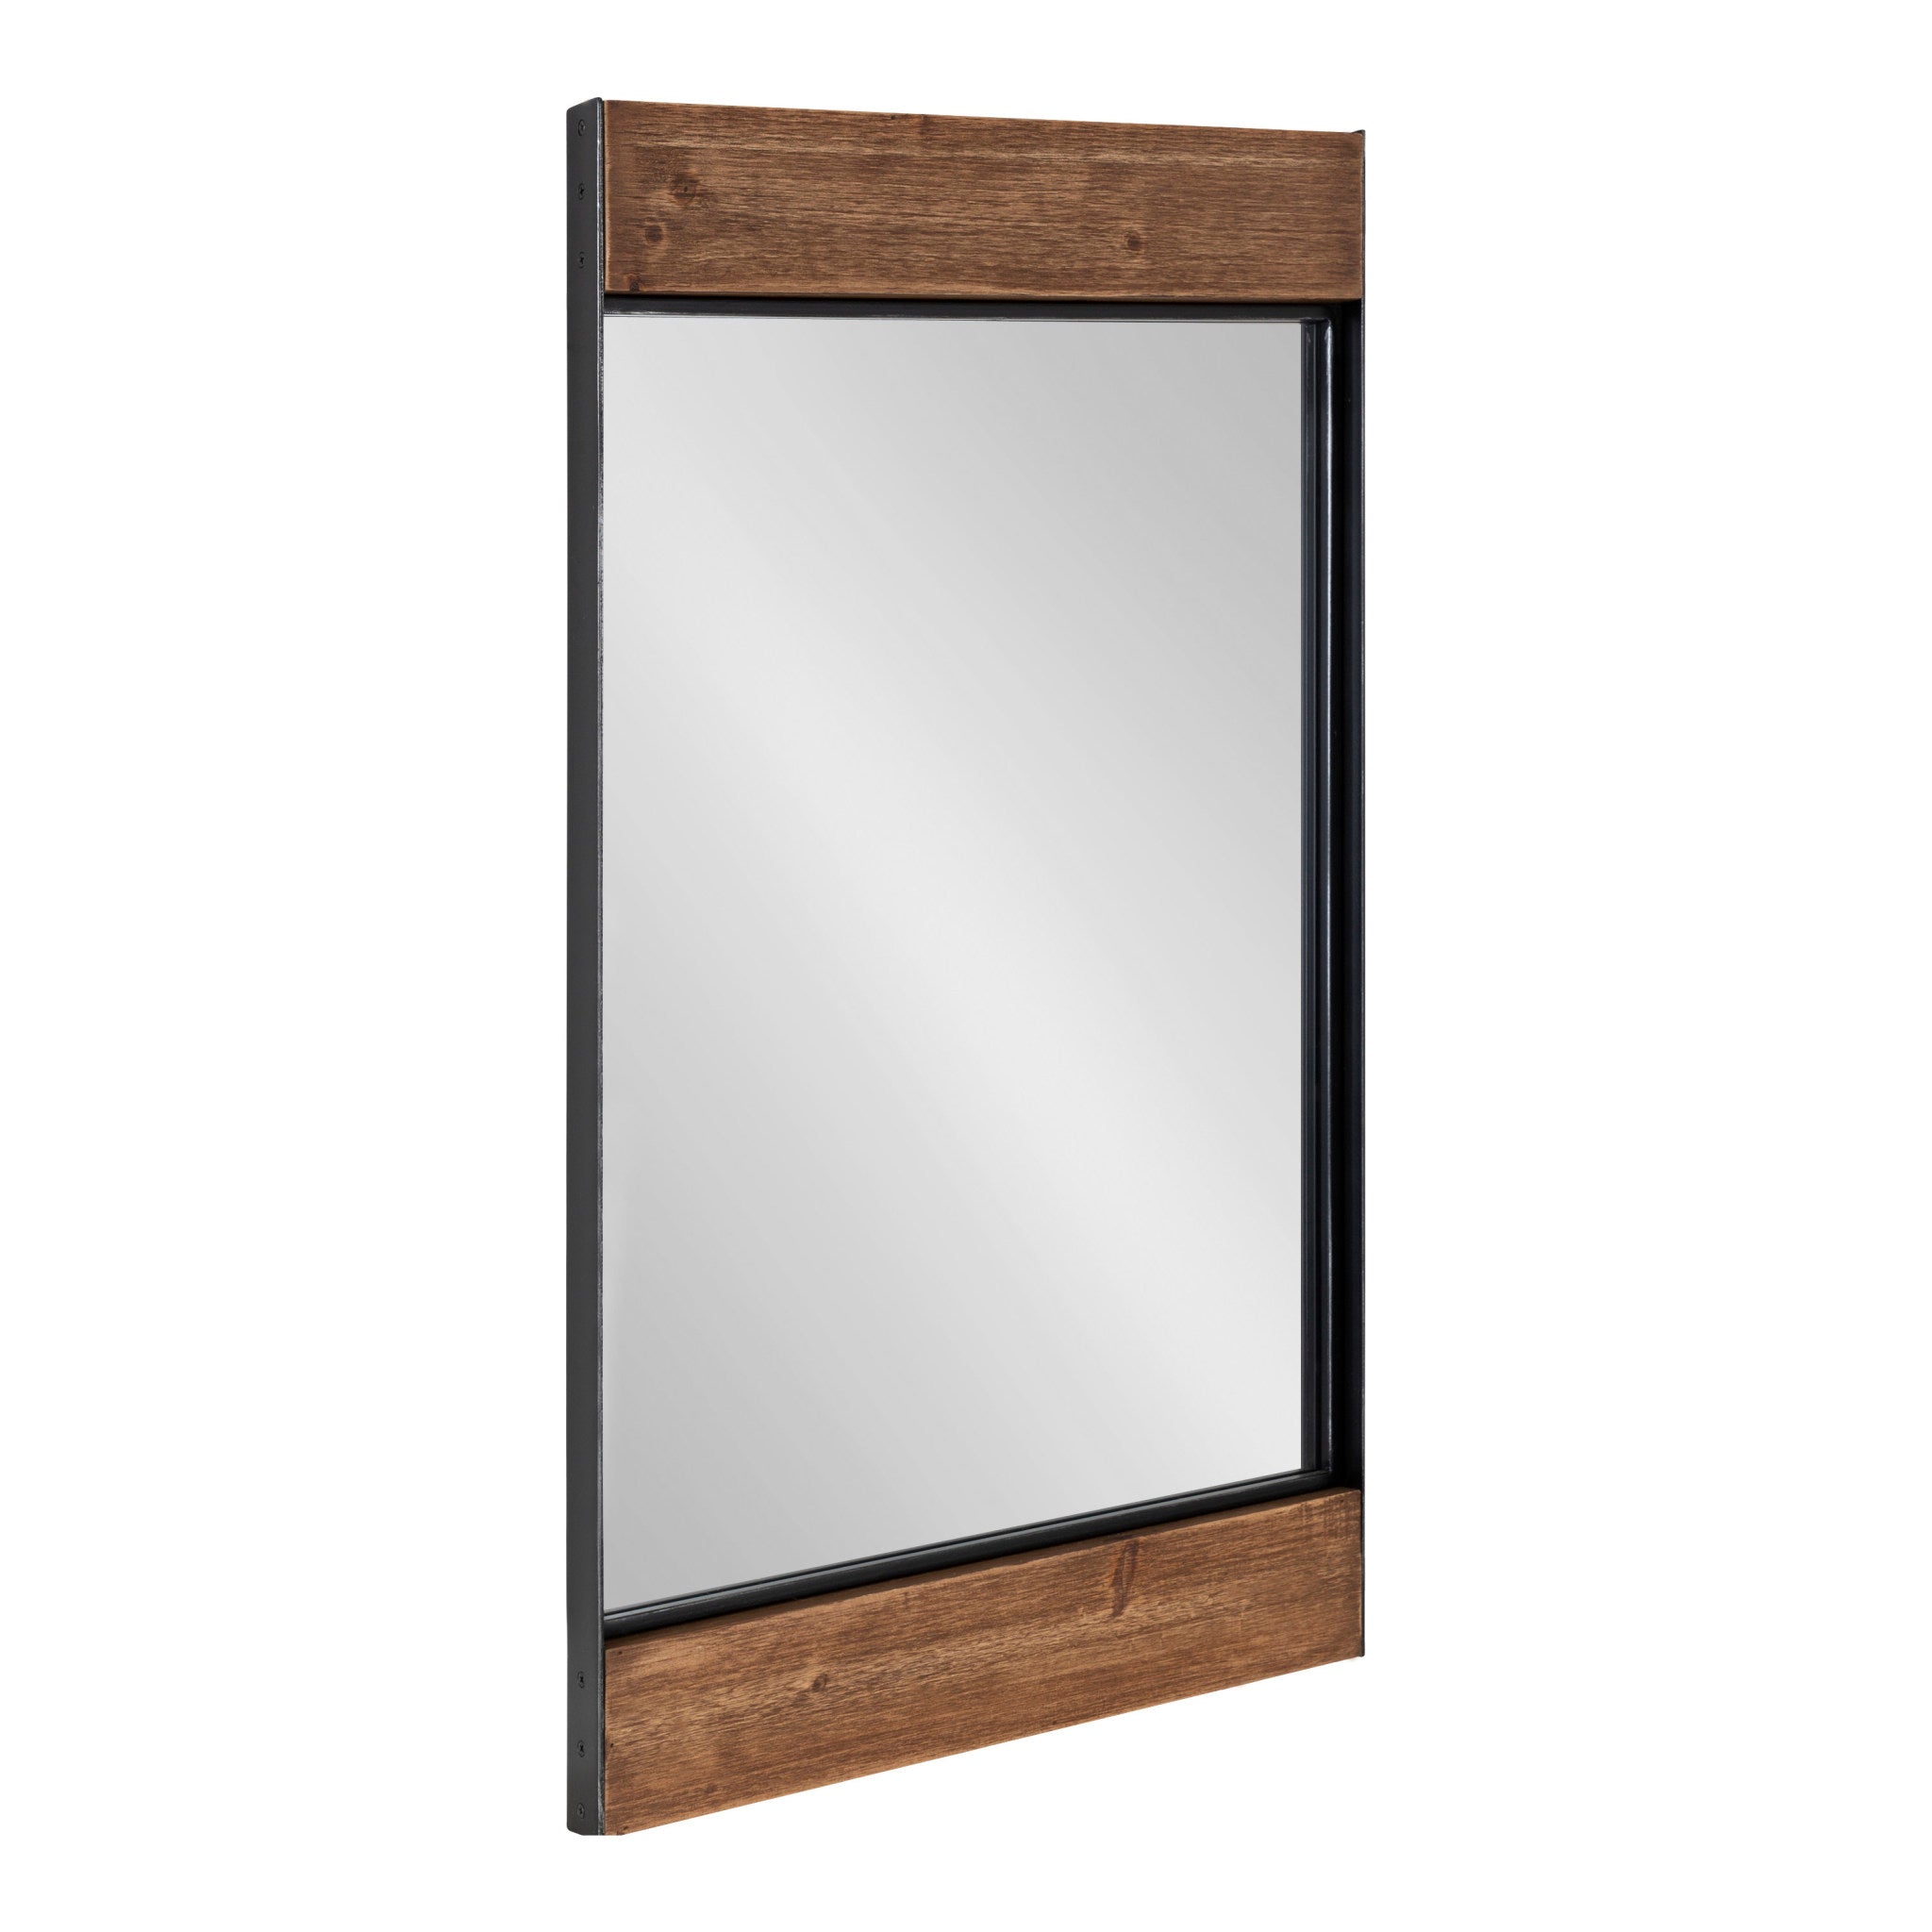 Kate Laurel Kincaid Farmhouse Wood Metal Framed Mirror, 20 x 36, Rustic and Black, Chic Rectangle Mirror for Wall – kateandlaurel